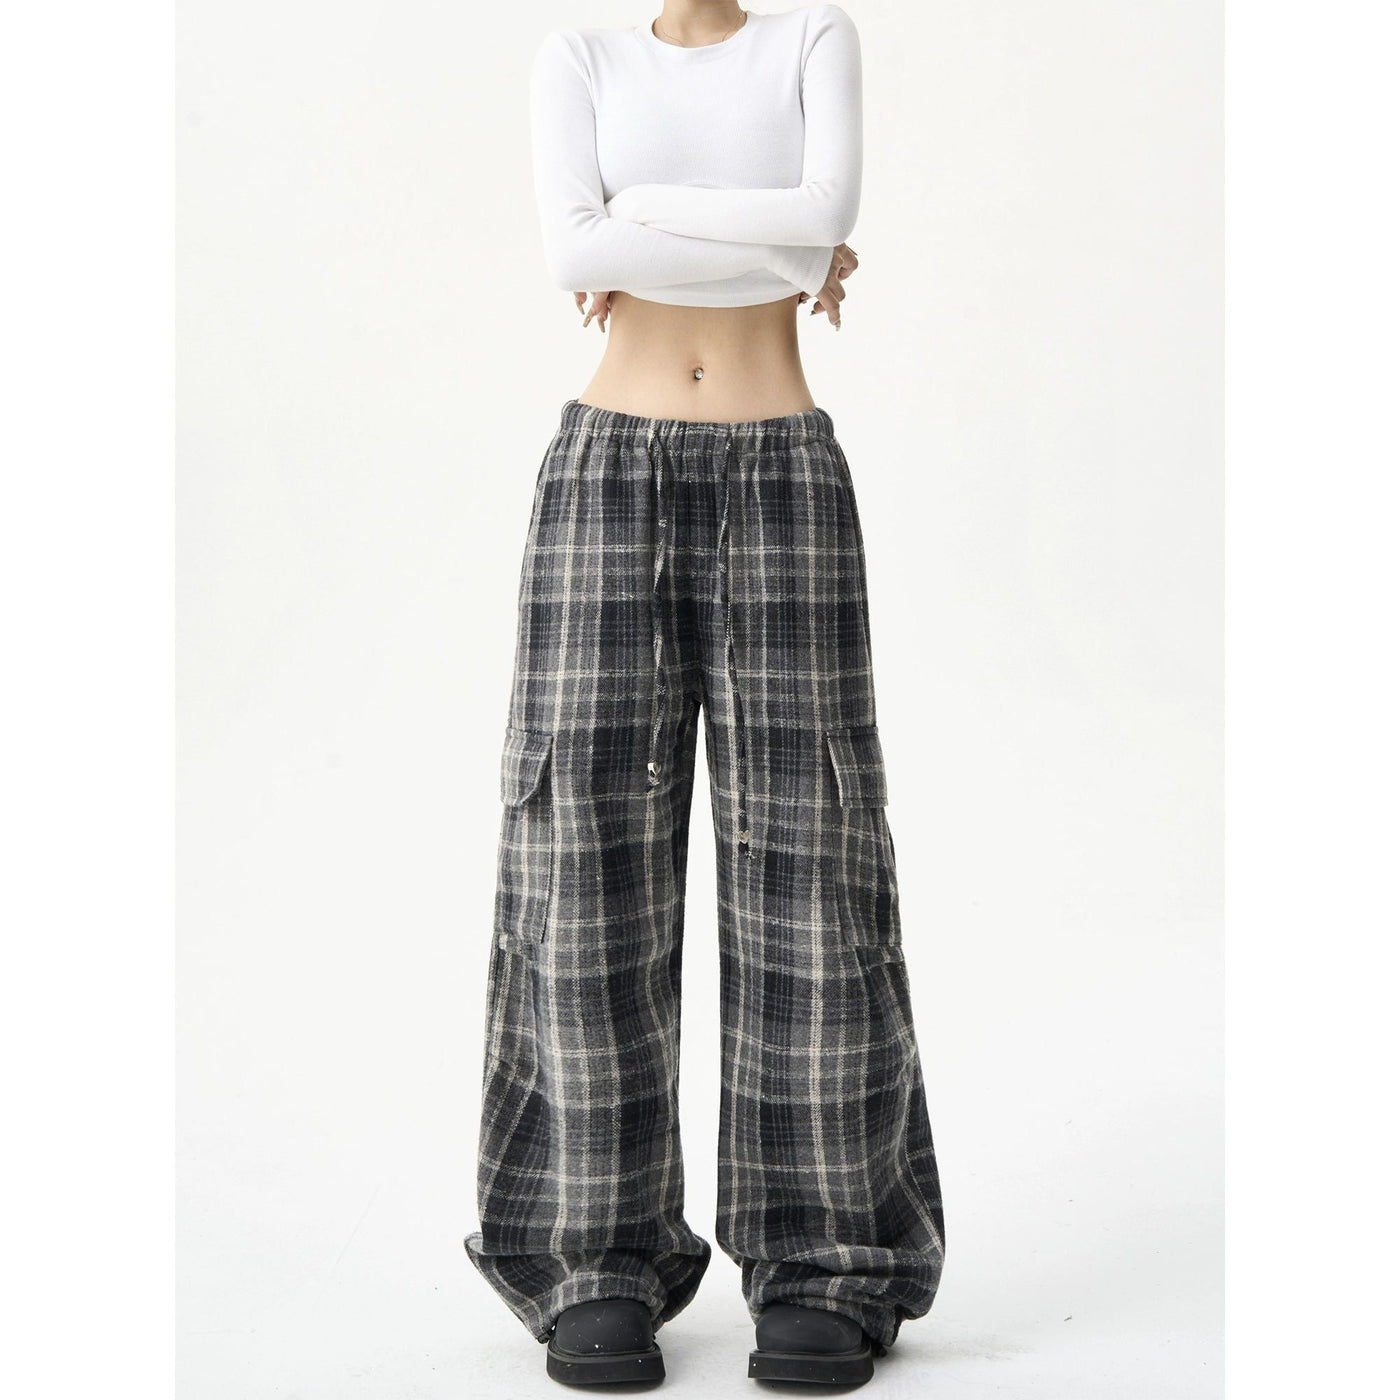 Drawstring Waist Plaid Cargo Pants Korean Street Fashion Pants By MaxDstr Shop Online at OH Vault